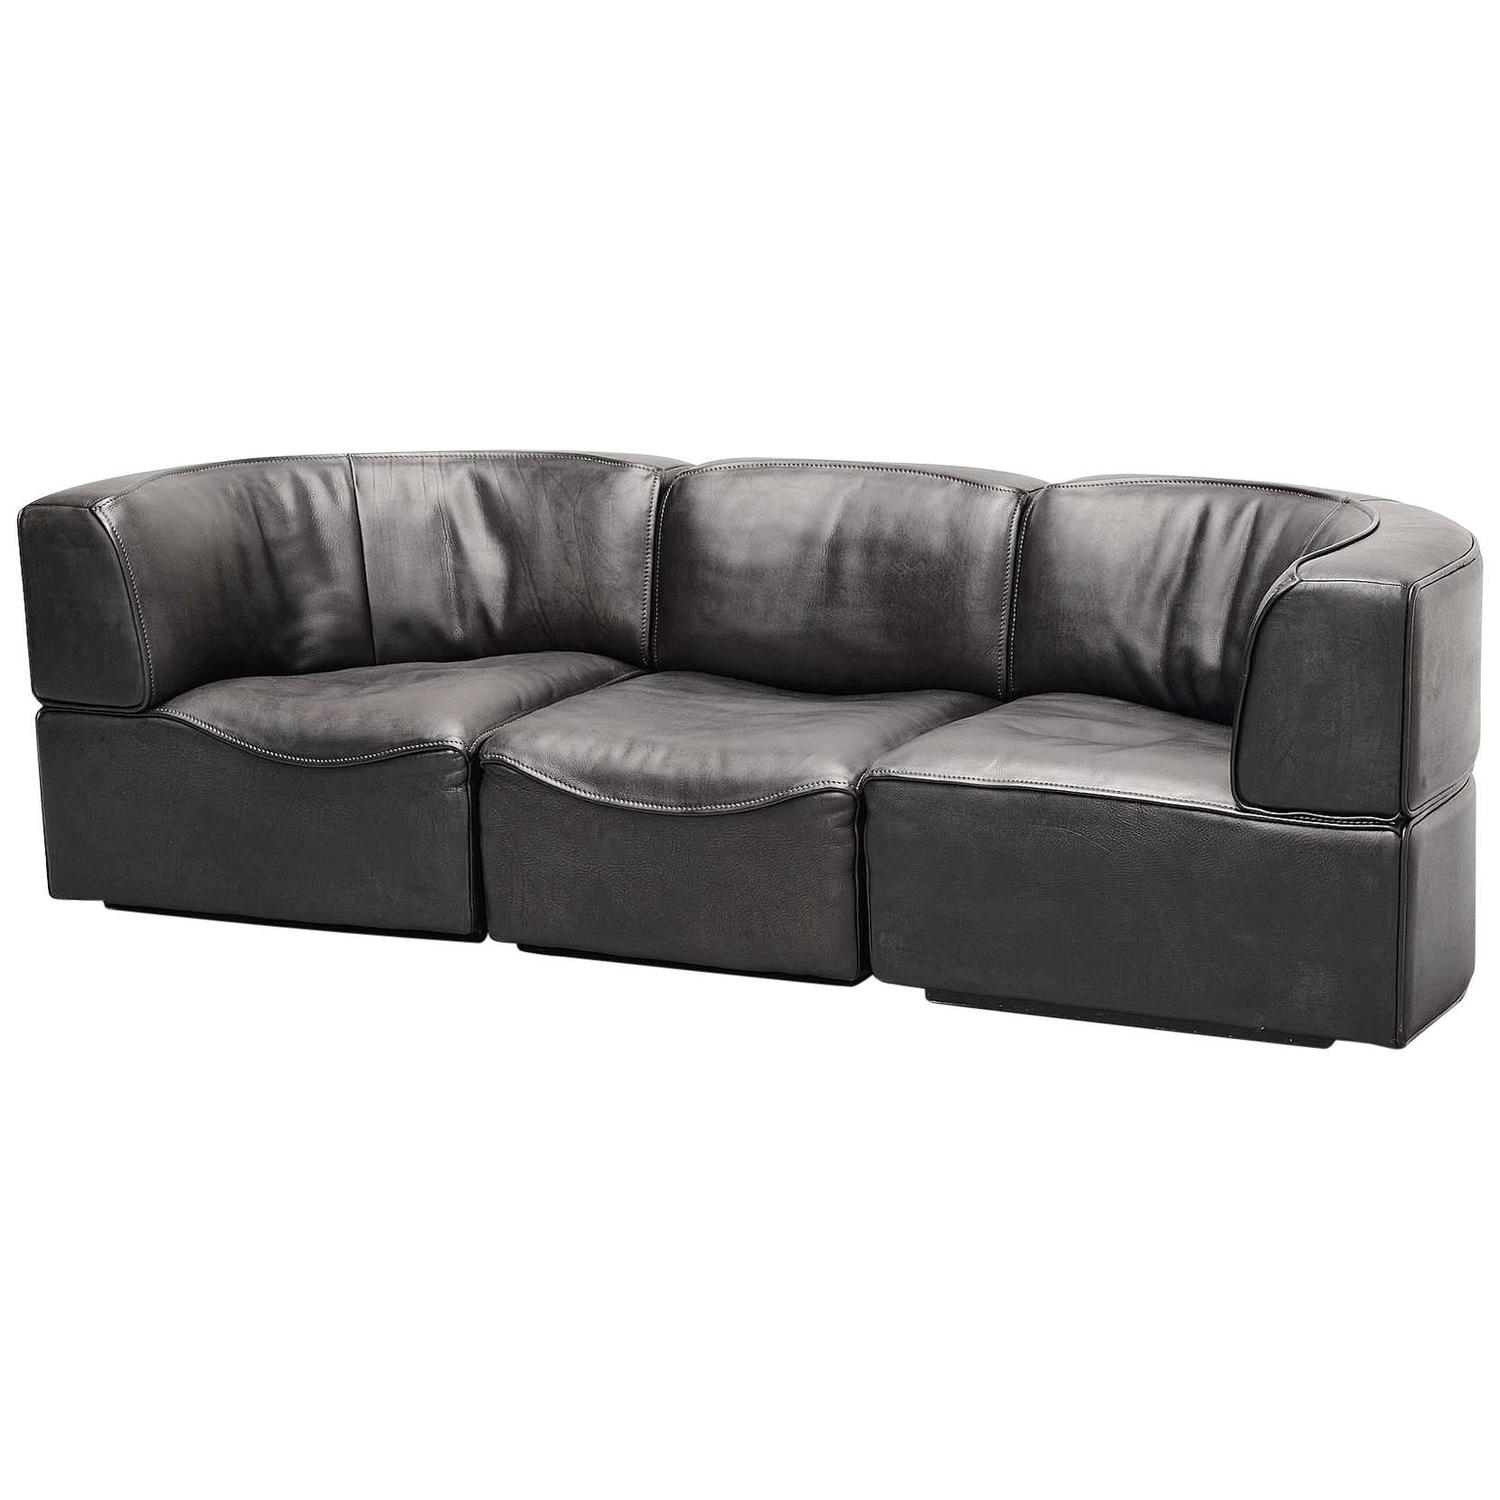 Iconic De Sede DS 600 "Non Stop" Modular Leather Sofa 20 Pieces